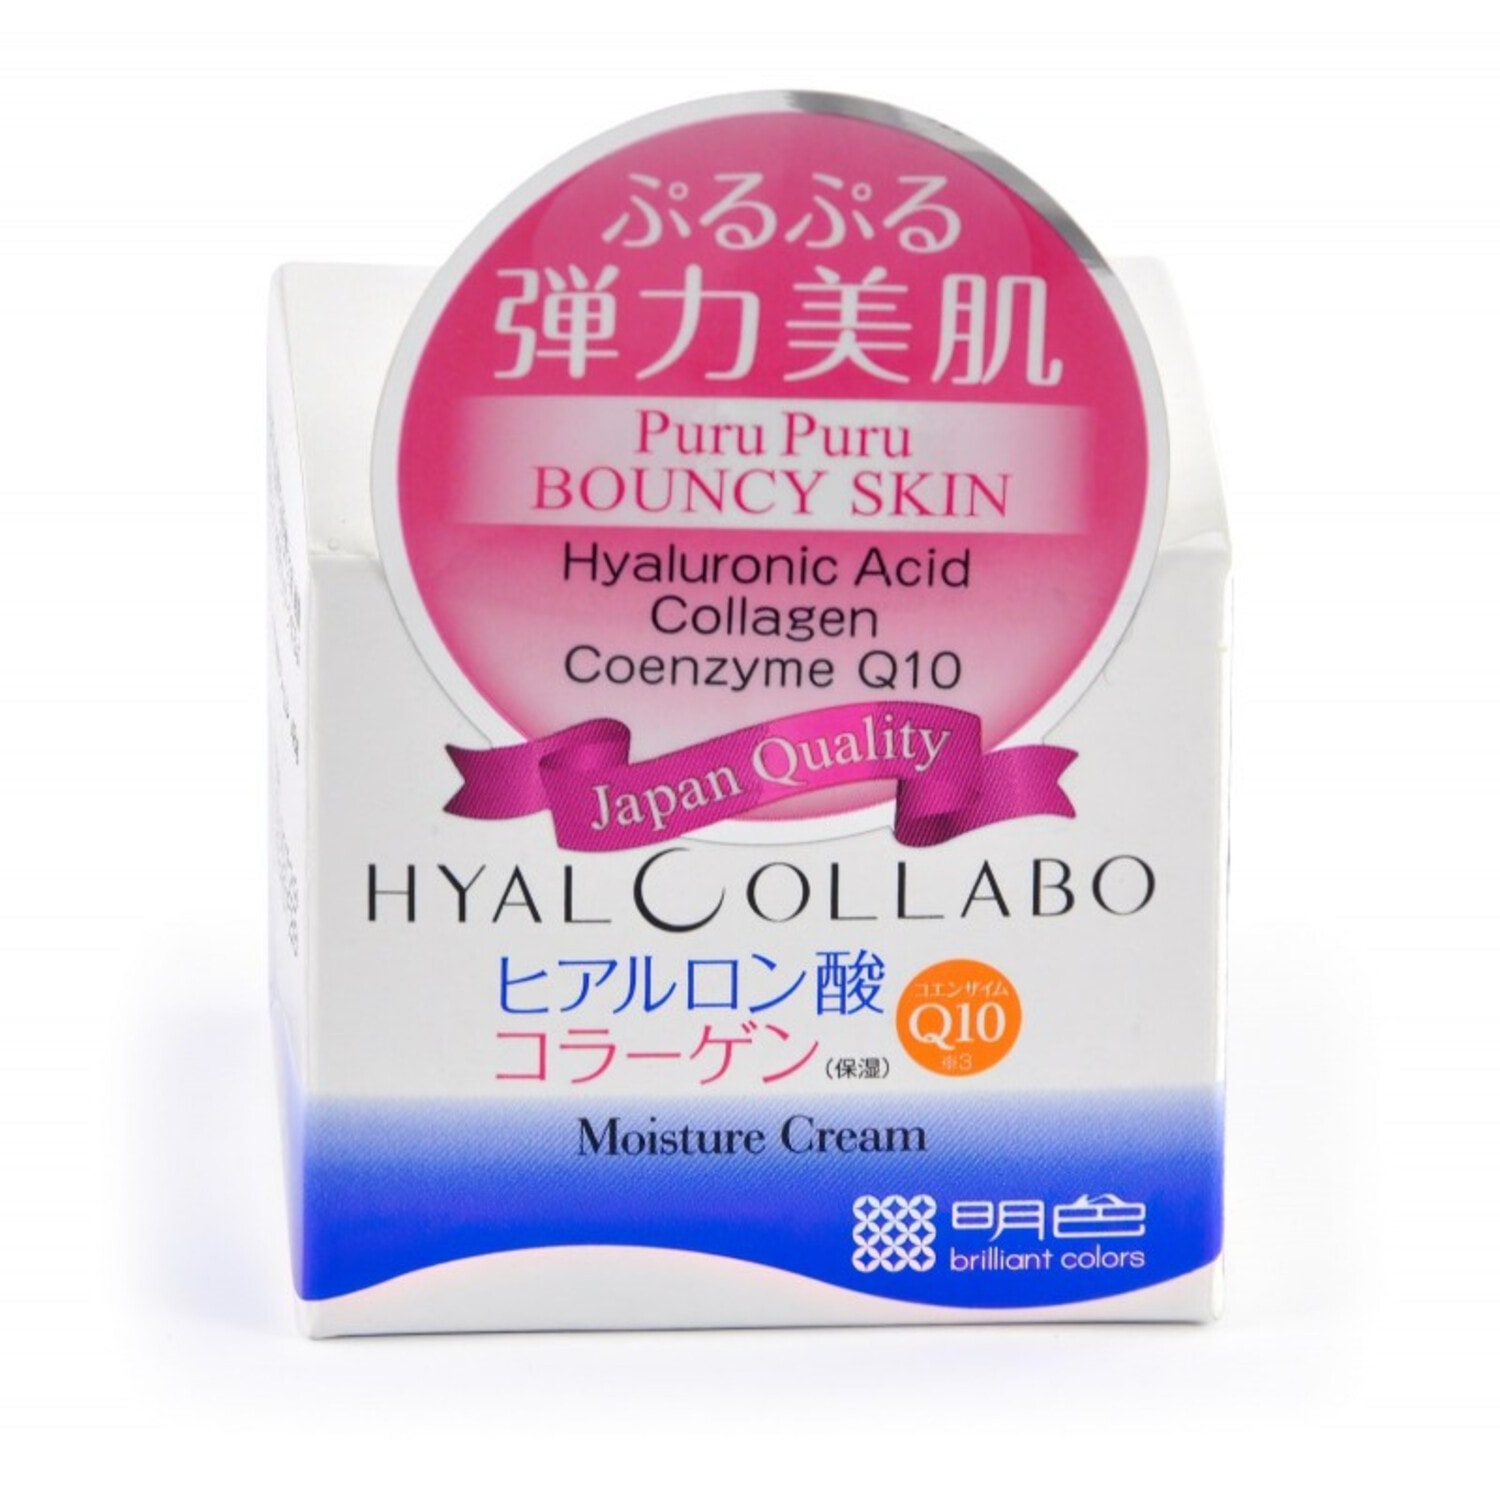 Meishoku "Hyalcollabo" Глубокоувлажняющий крем для лица с гиалуроновой кислотой 48 г. / 227080 (4Т)